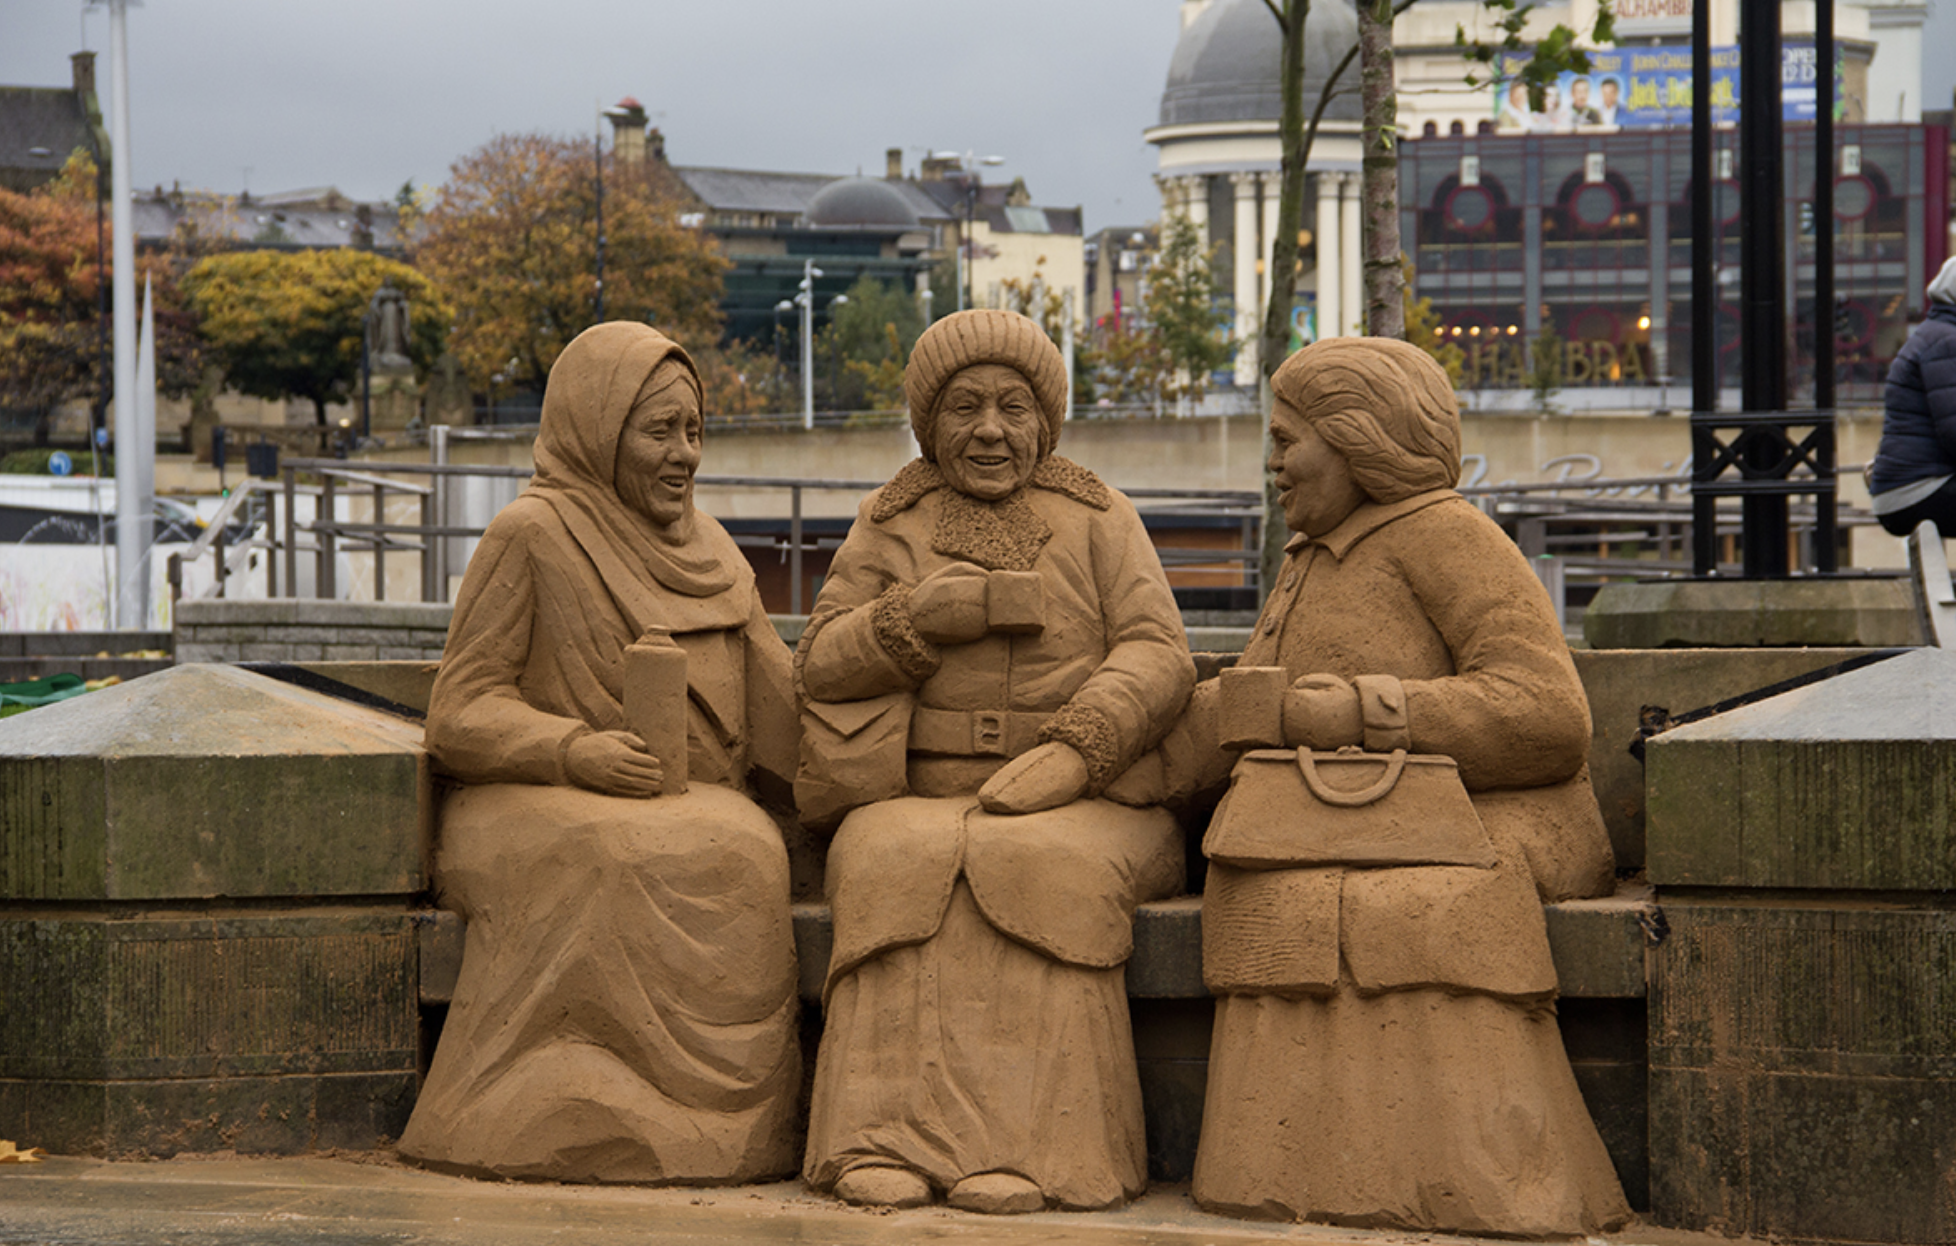 Sand sculpture trail to celebrate Bradford’s cultural heritage